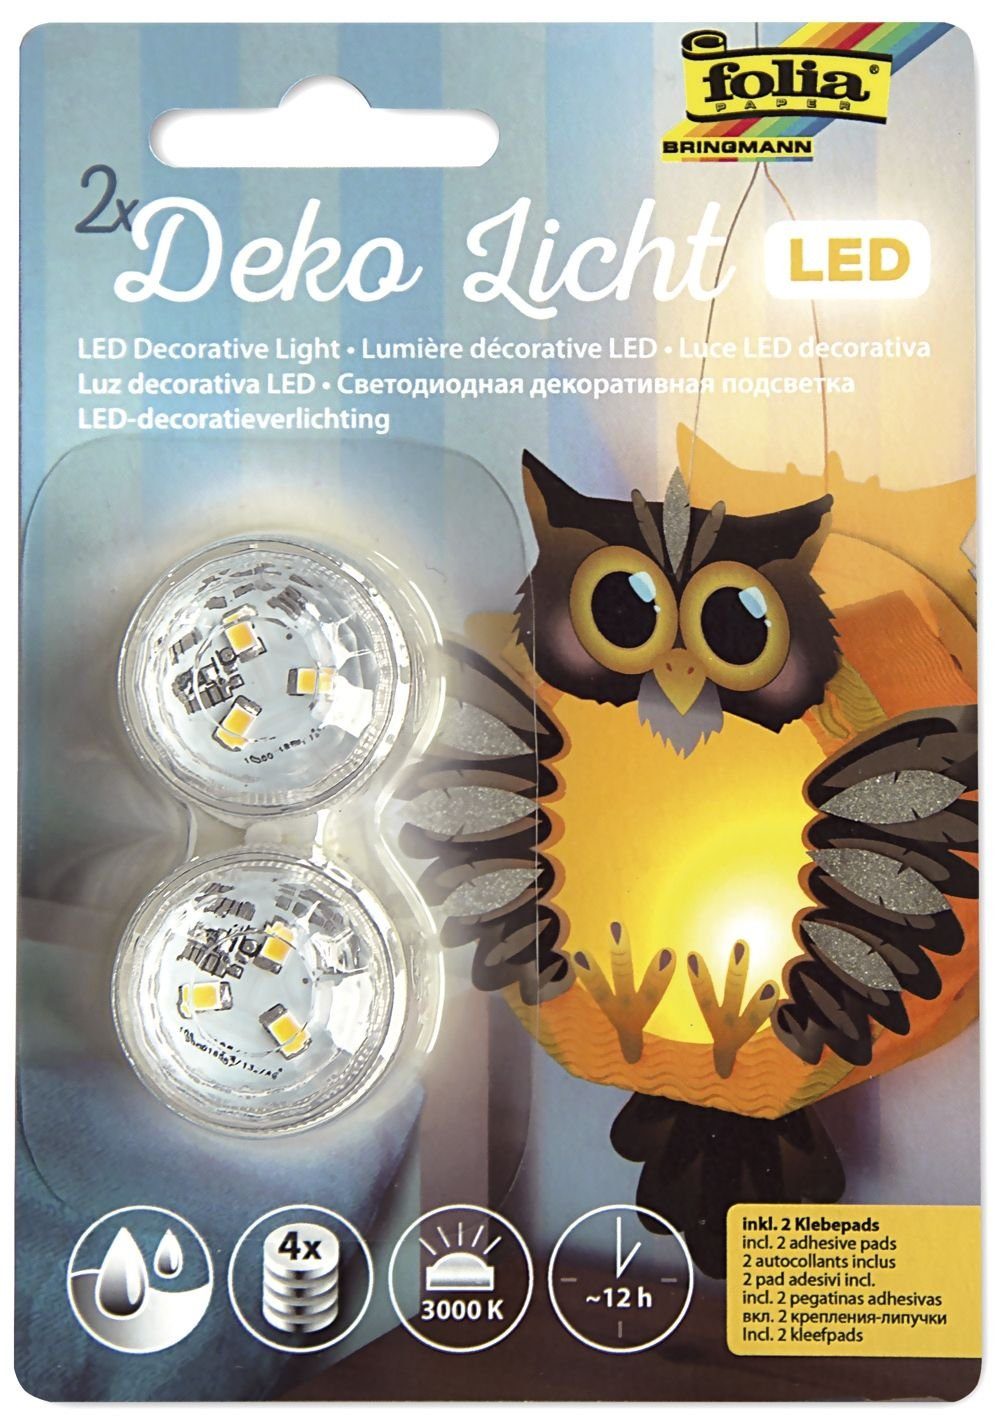 LED-Deko-Licht, folia Folia inkl. Batterien Klemmen